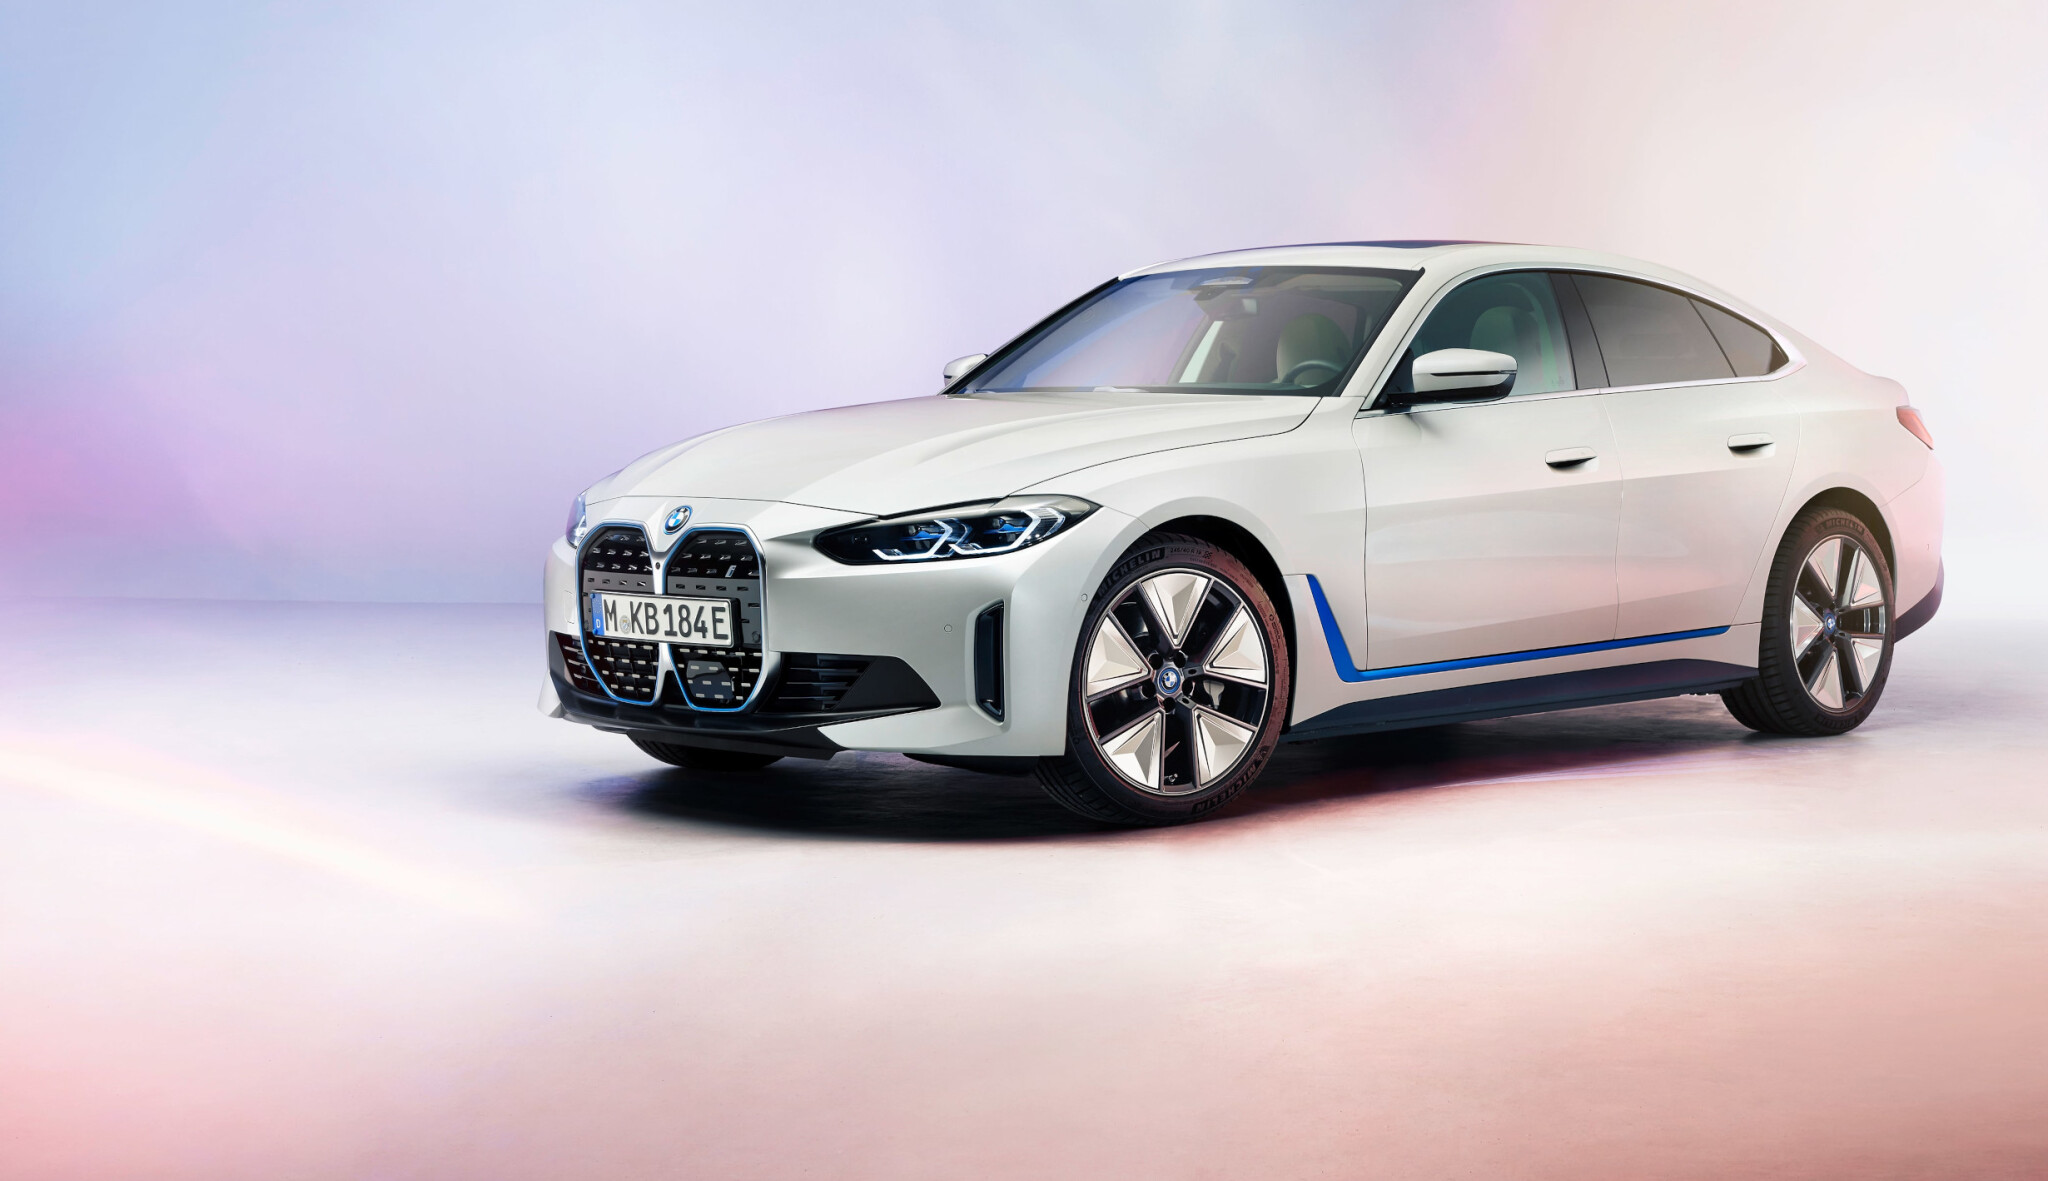 Novinky u BMW: elektrický sedan a Mini už jen do zásuvky